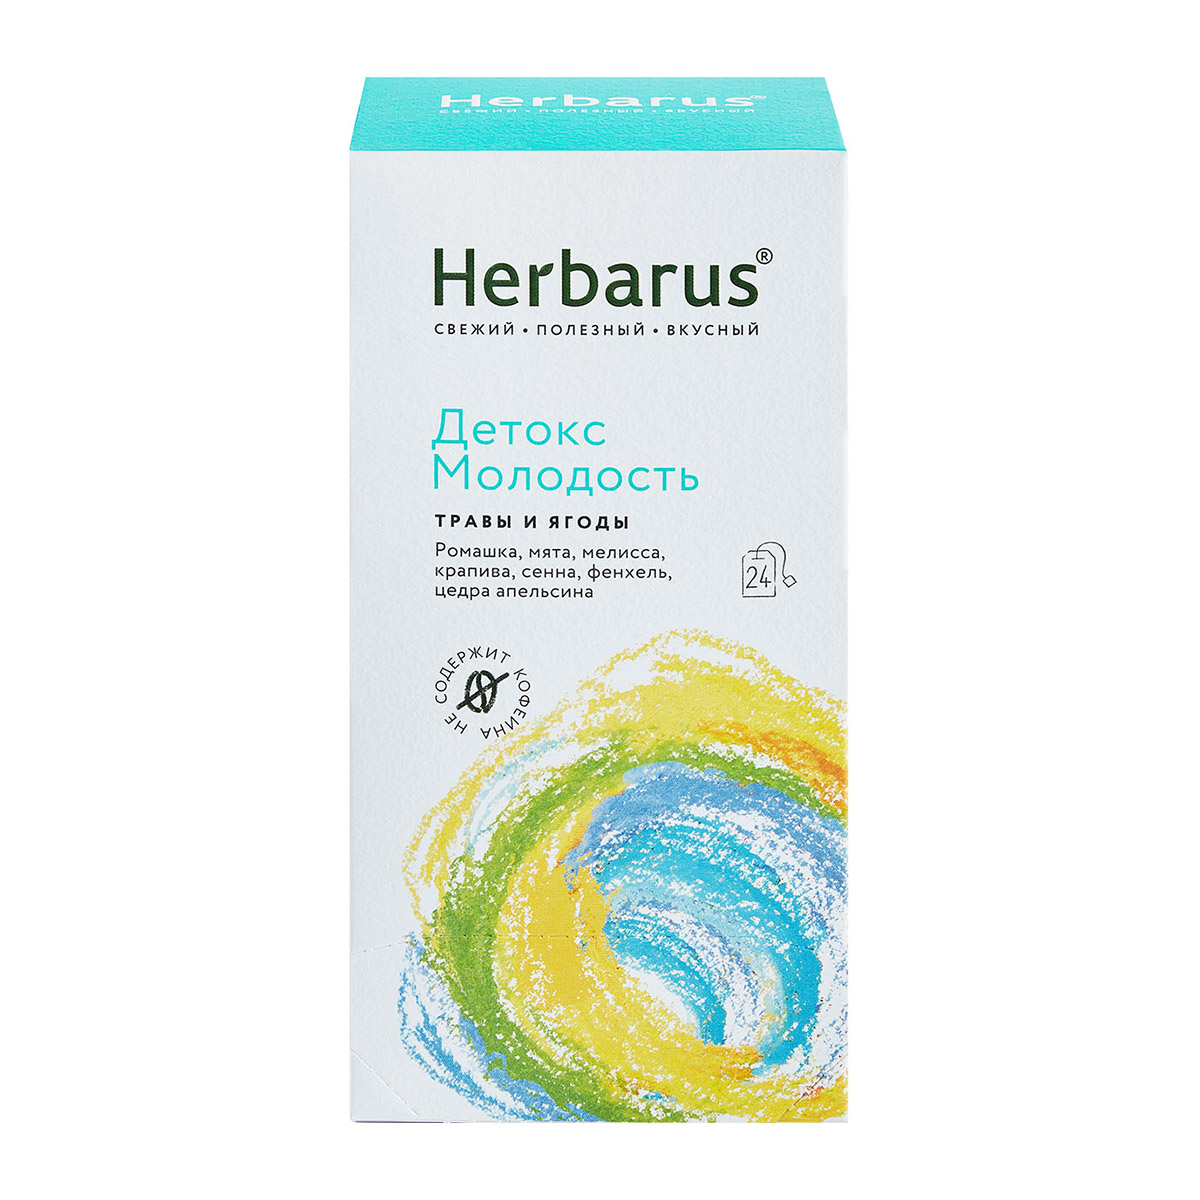 Herbarus Чайный напиток Детокс и молодость, 24 х 1,8 г (Herbarus, Травы и ягоды) чайный напиток herbarus заряд витаминов 24 пакетика